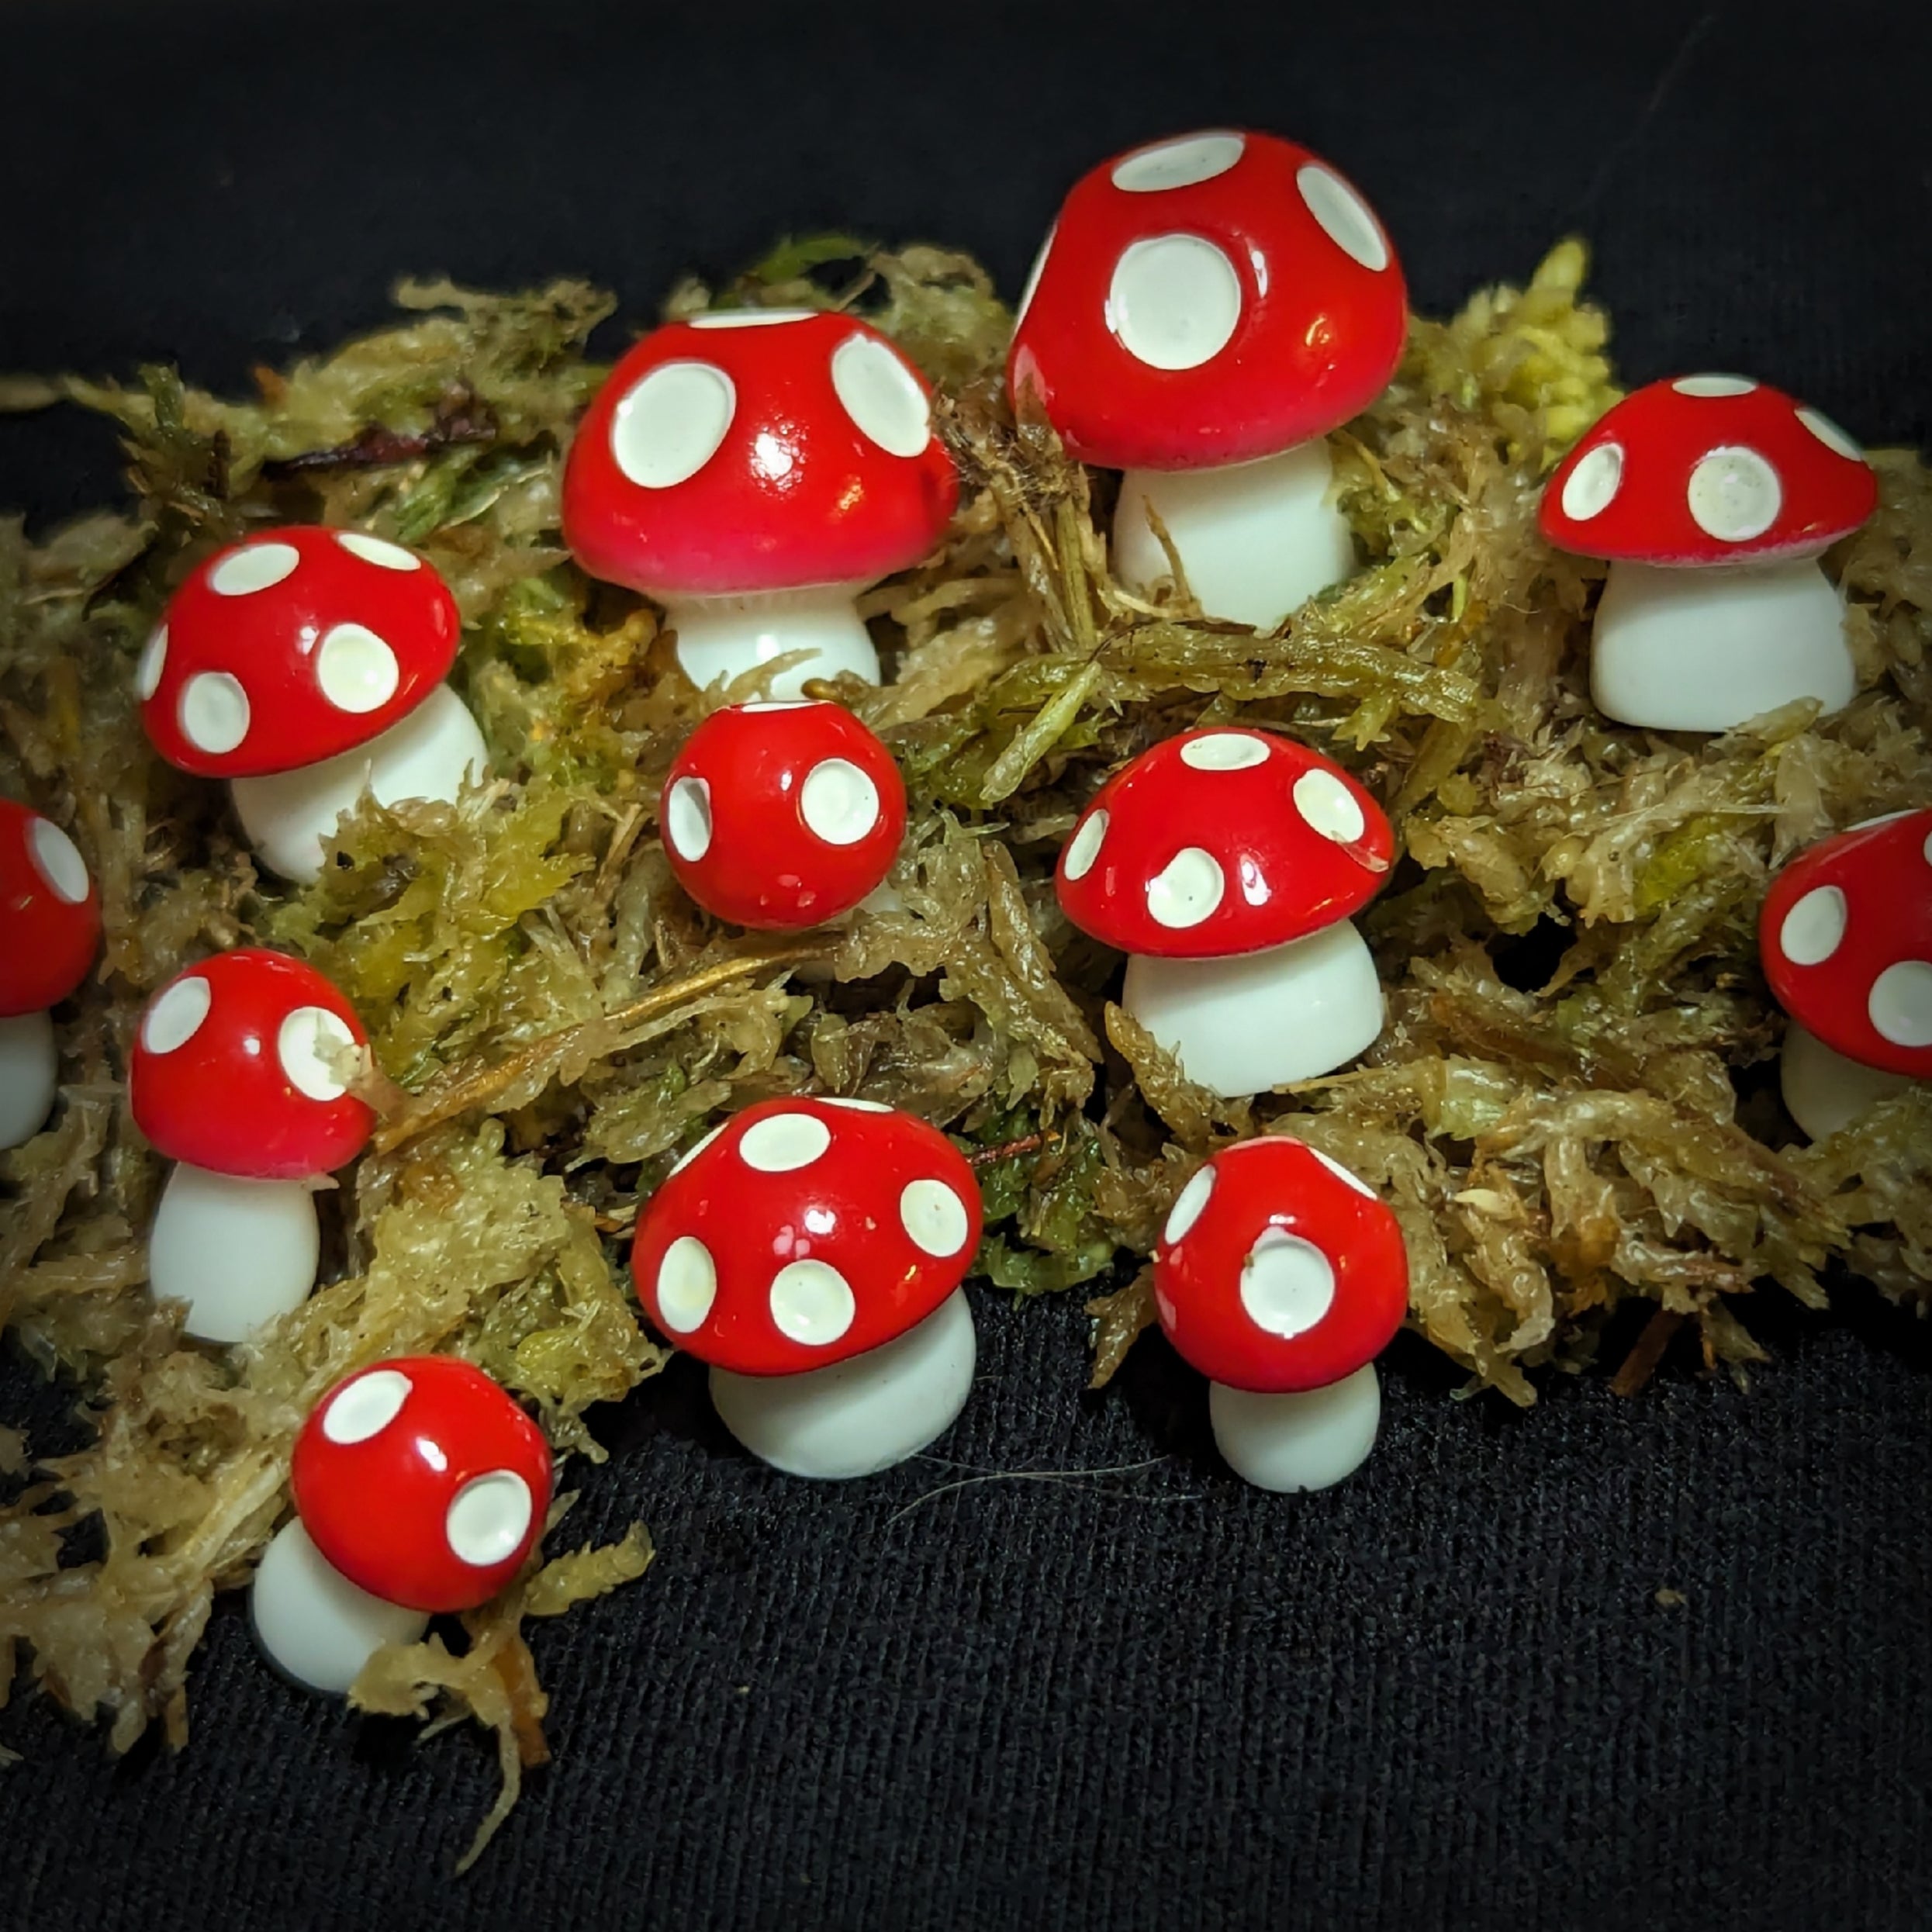 Plastic Garden Mushroom Set (24 Count)